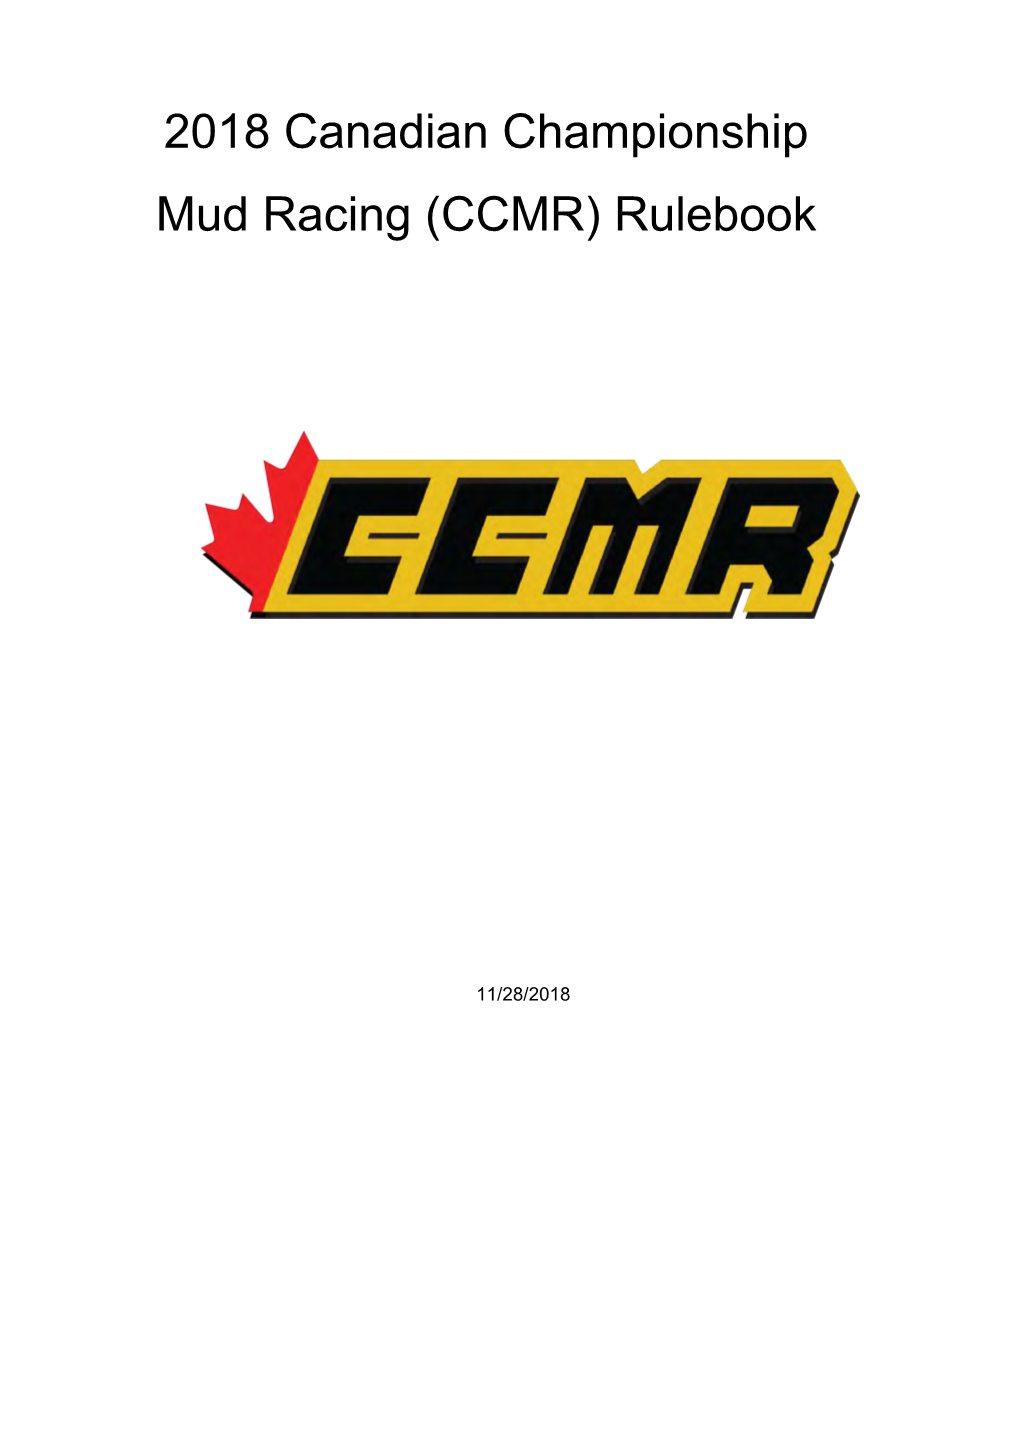 2016 Championship Mud Racing (CMR) Rulebook